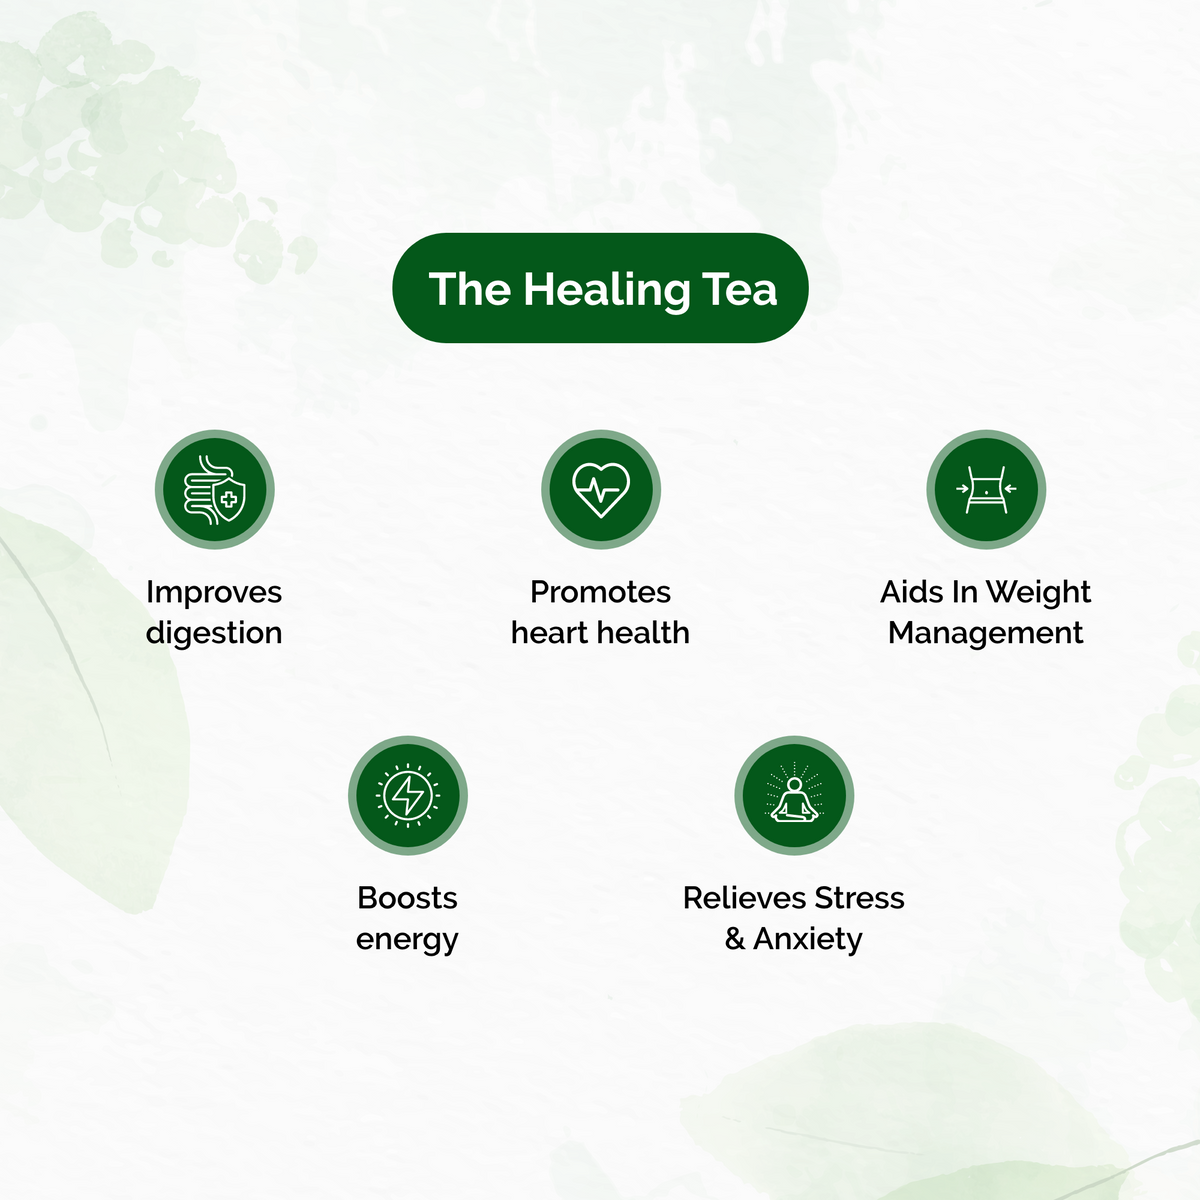 Chymey Nirvana Green Tea Bags:  15 Pyramid Tea Bags